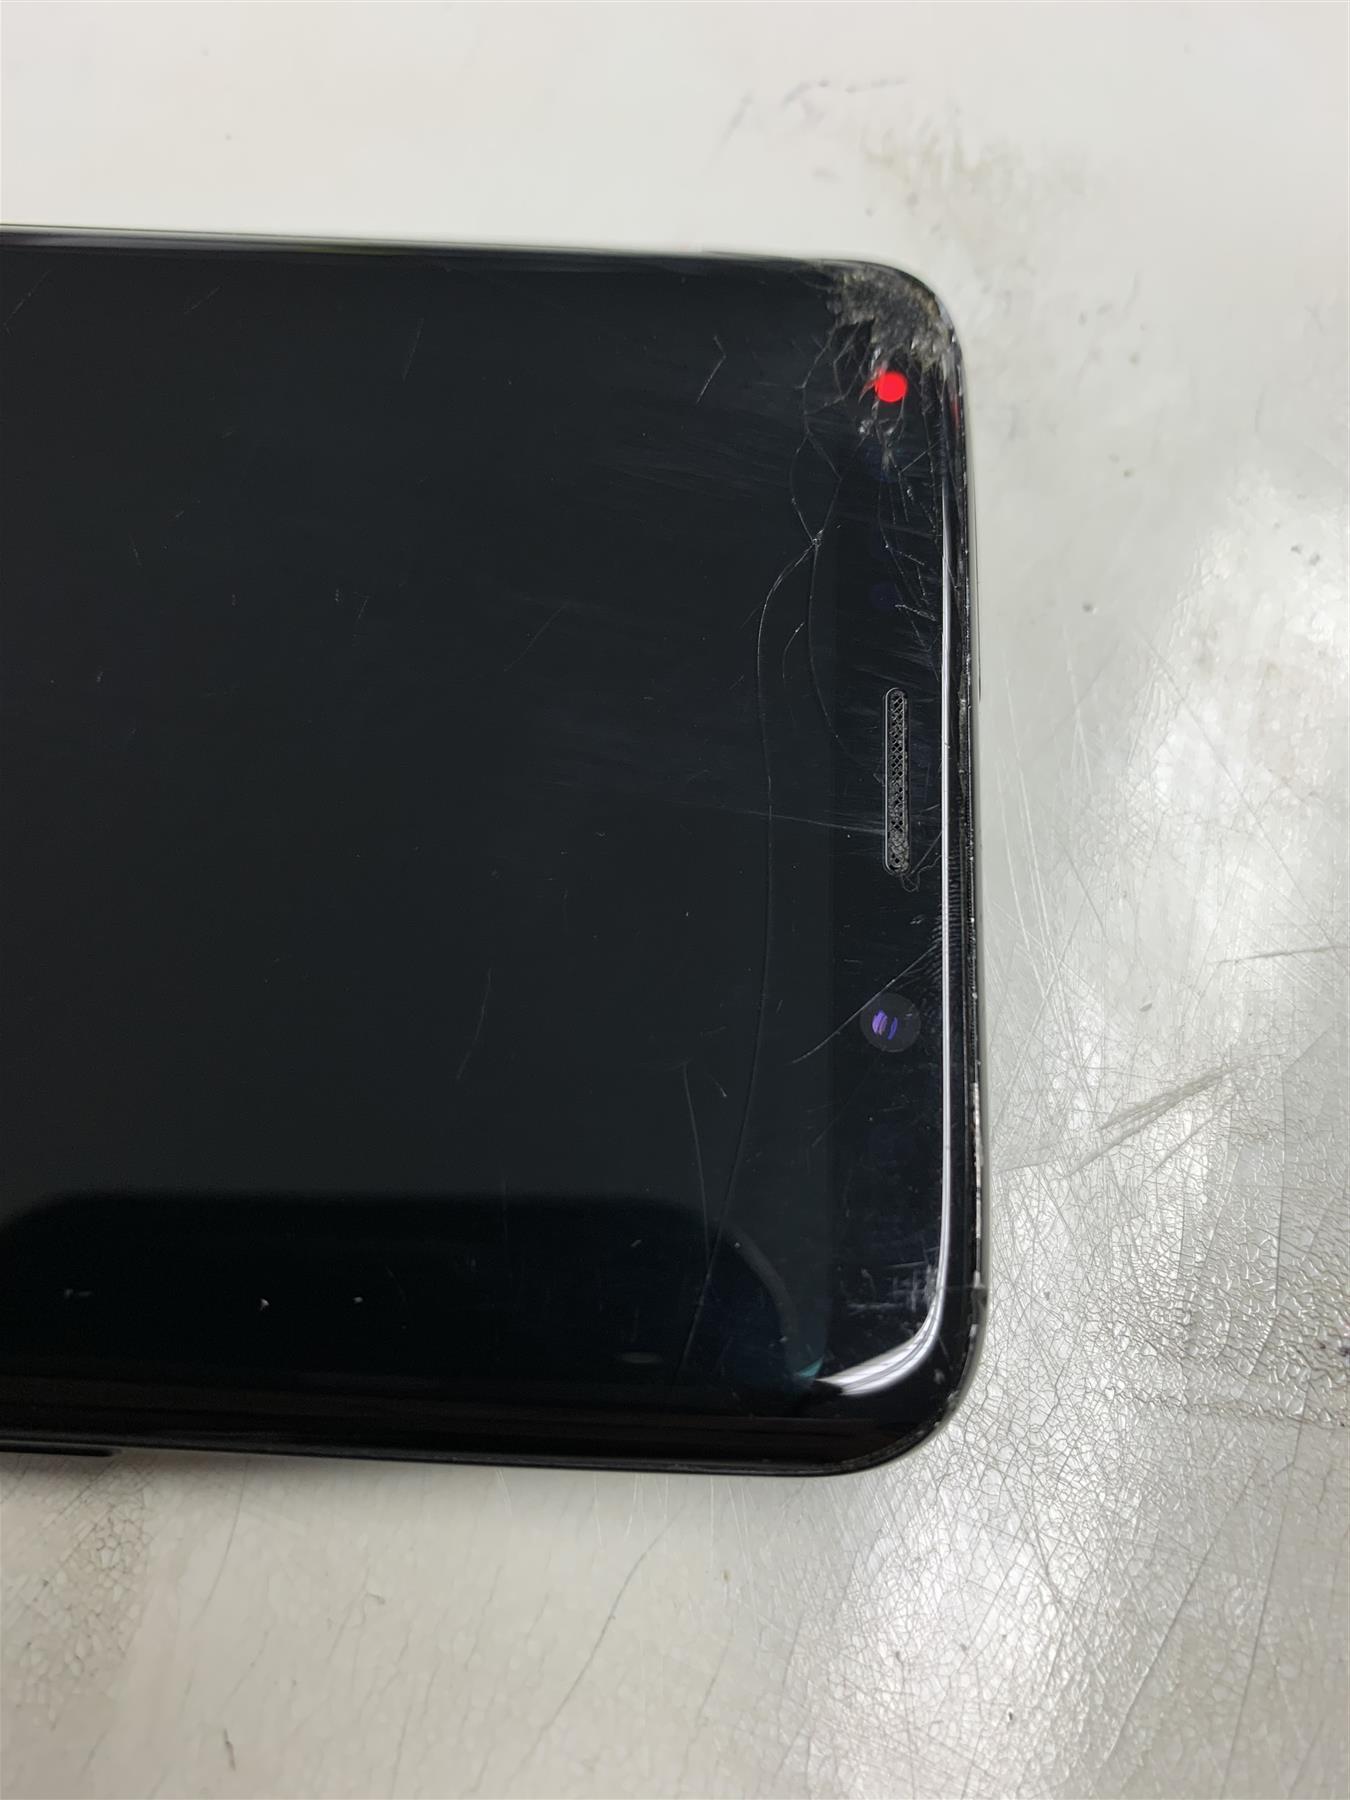 Samsung Galaxy S9 64GB Midnight Black Unlocked - Used